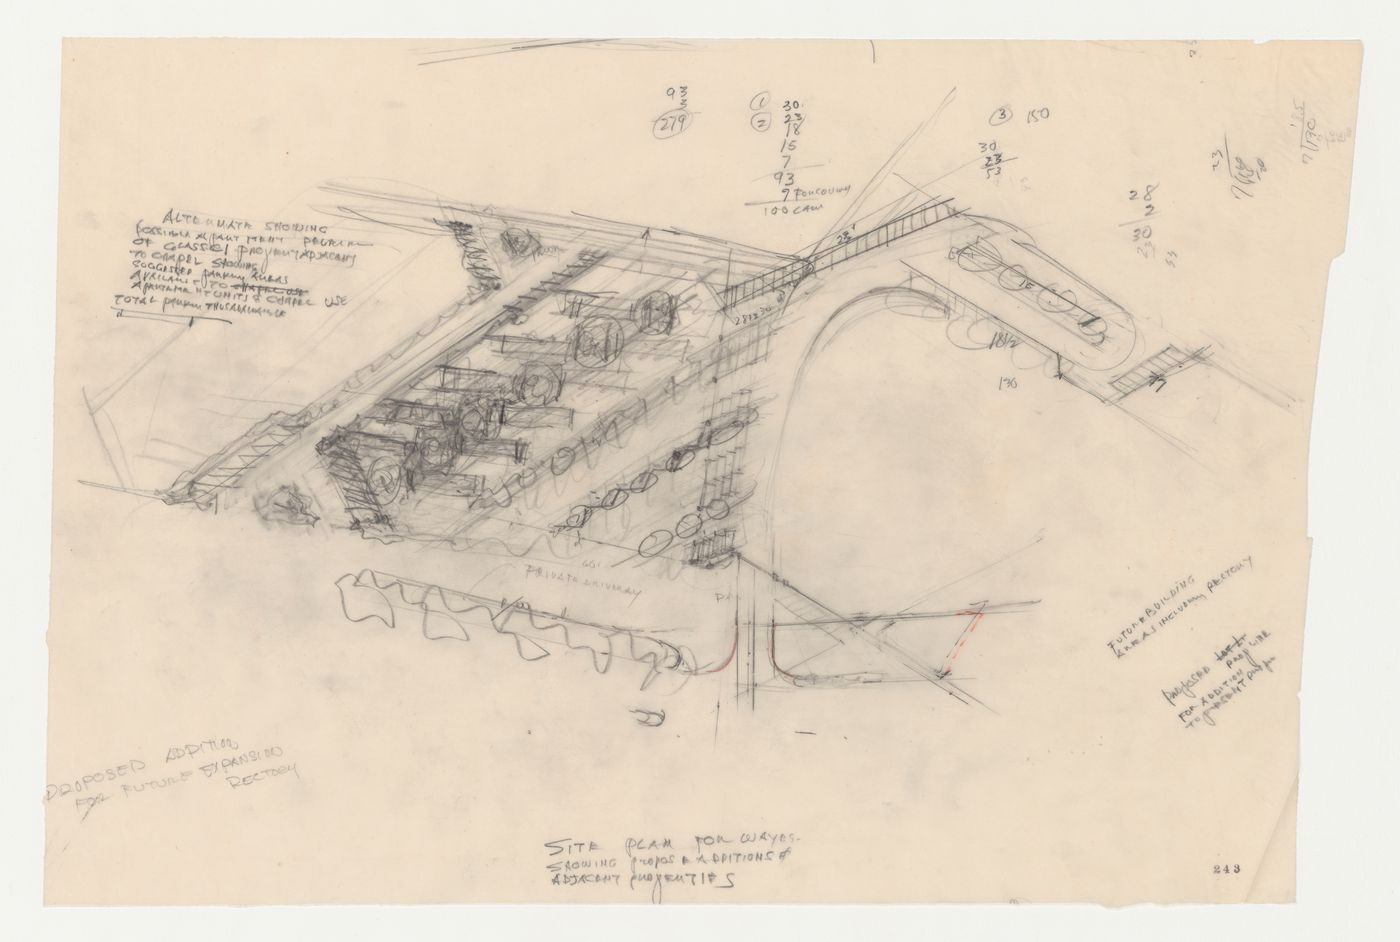 Wayfarers' Chapel, Palos Verdes, California: Sketch site plan for apartment development on adjacent lot